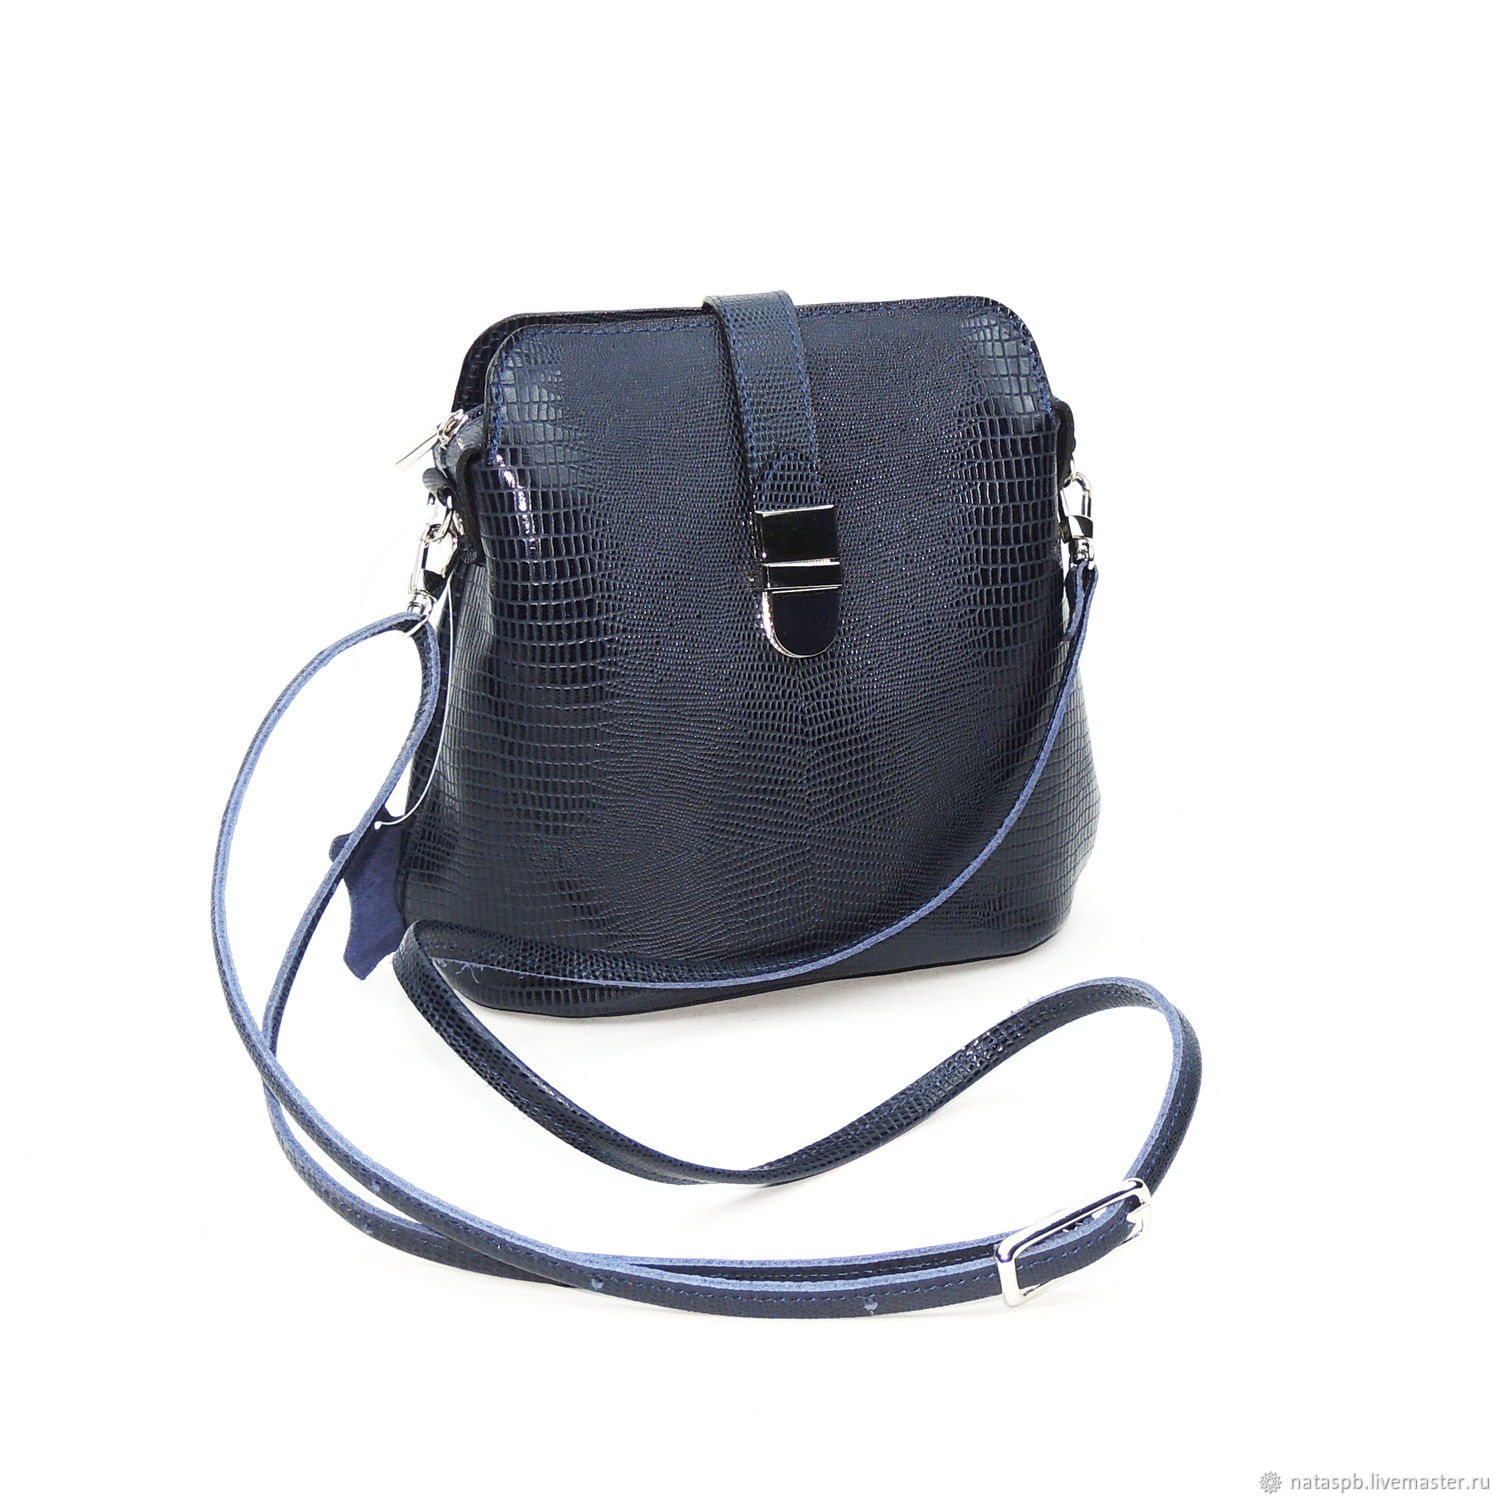  Leather handbag women's blue Odette Mod. C42-961, Crossbody bag, St. Petersburg,  Фото №1